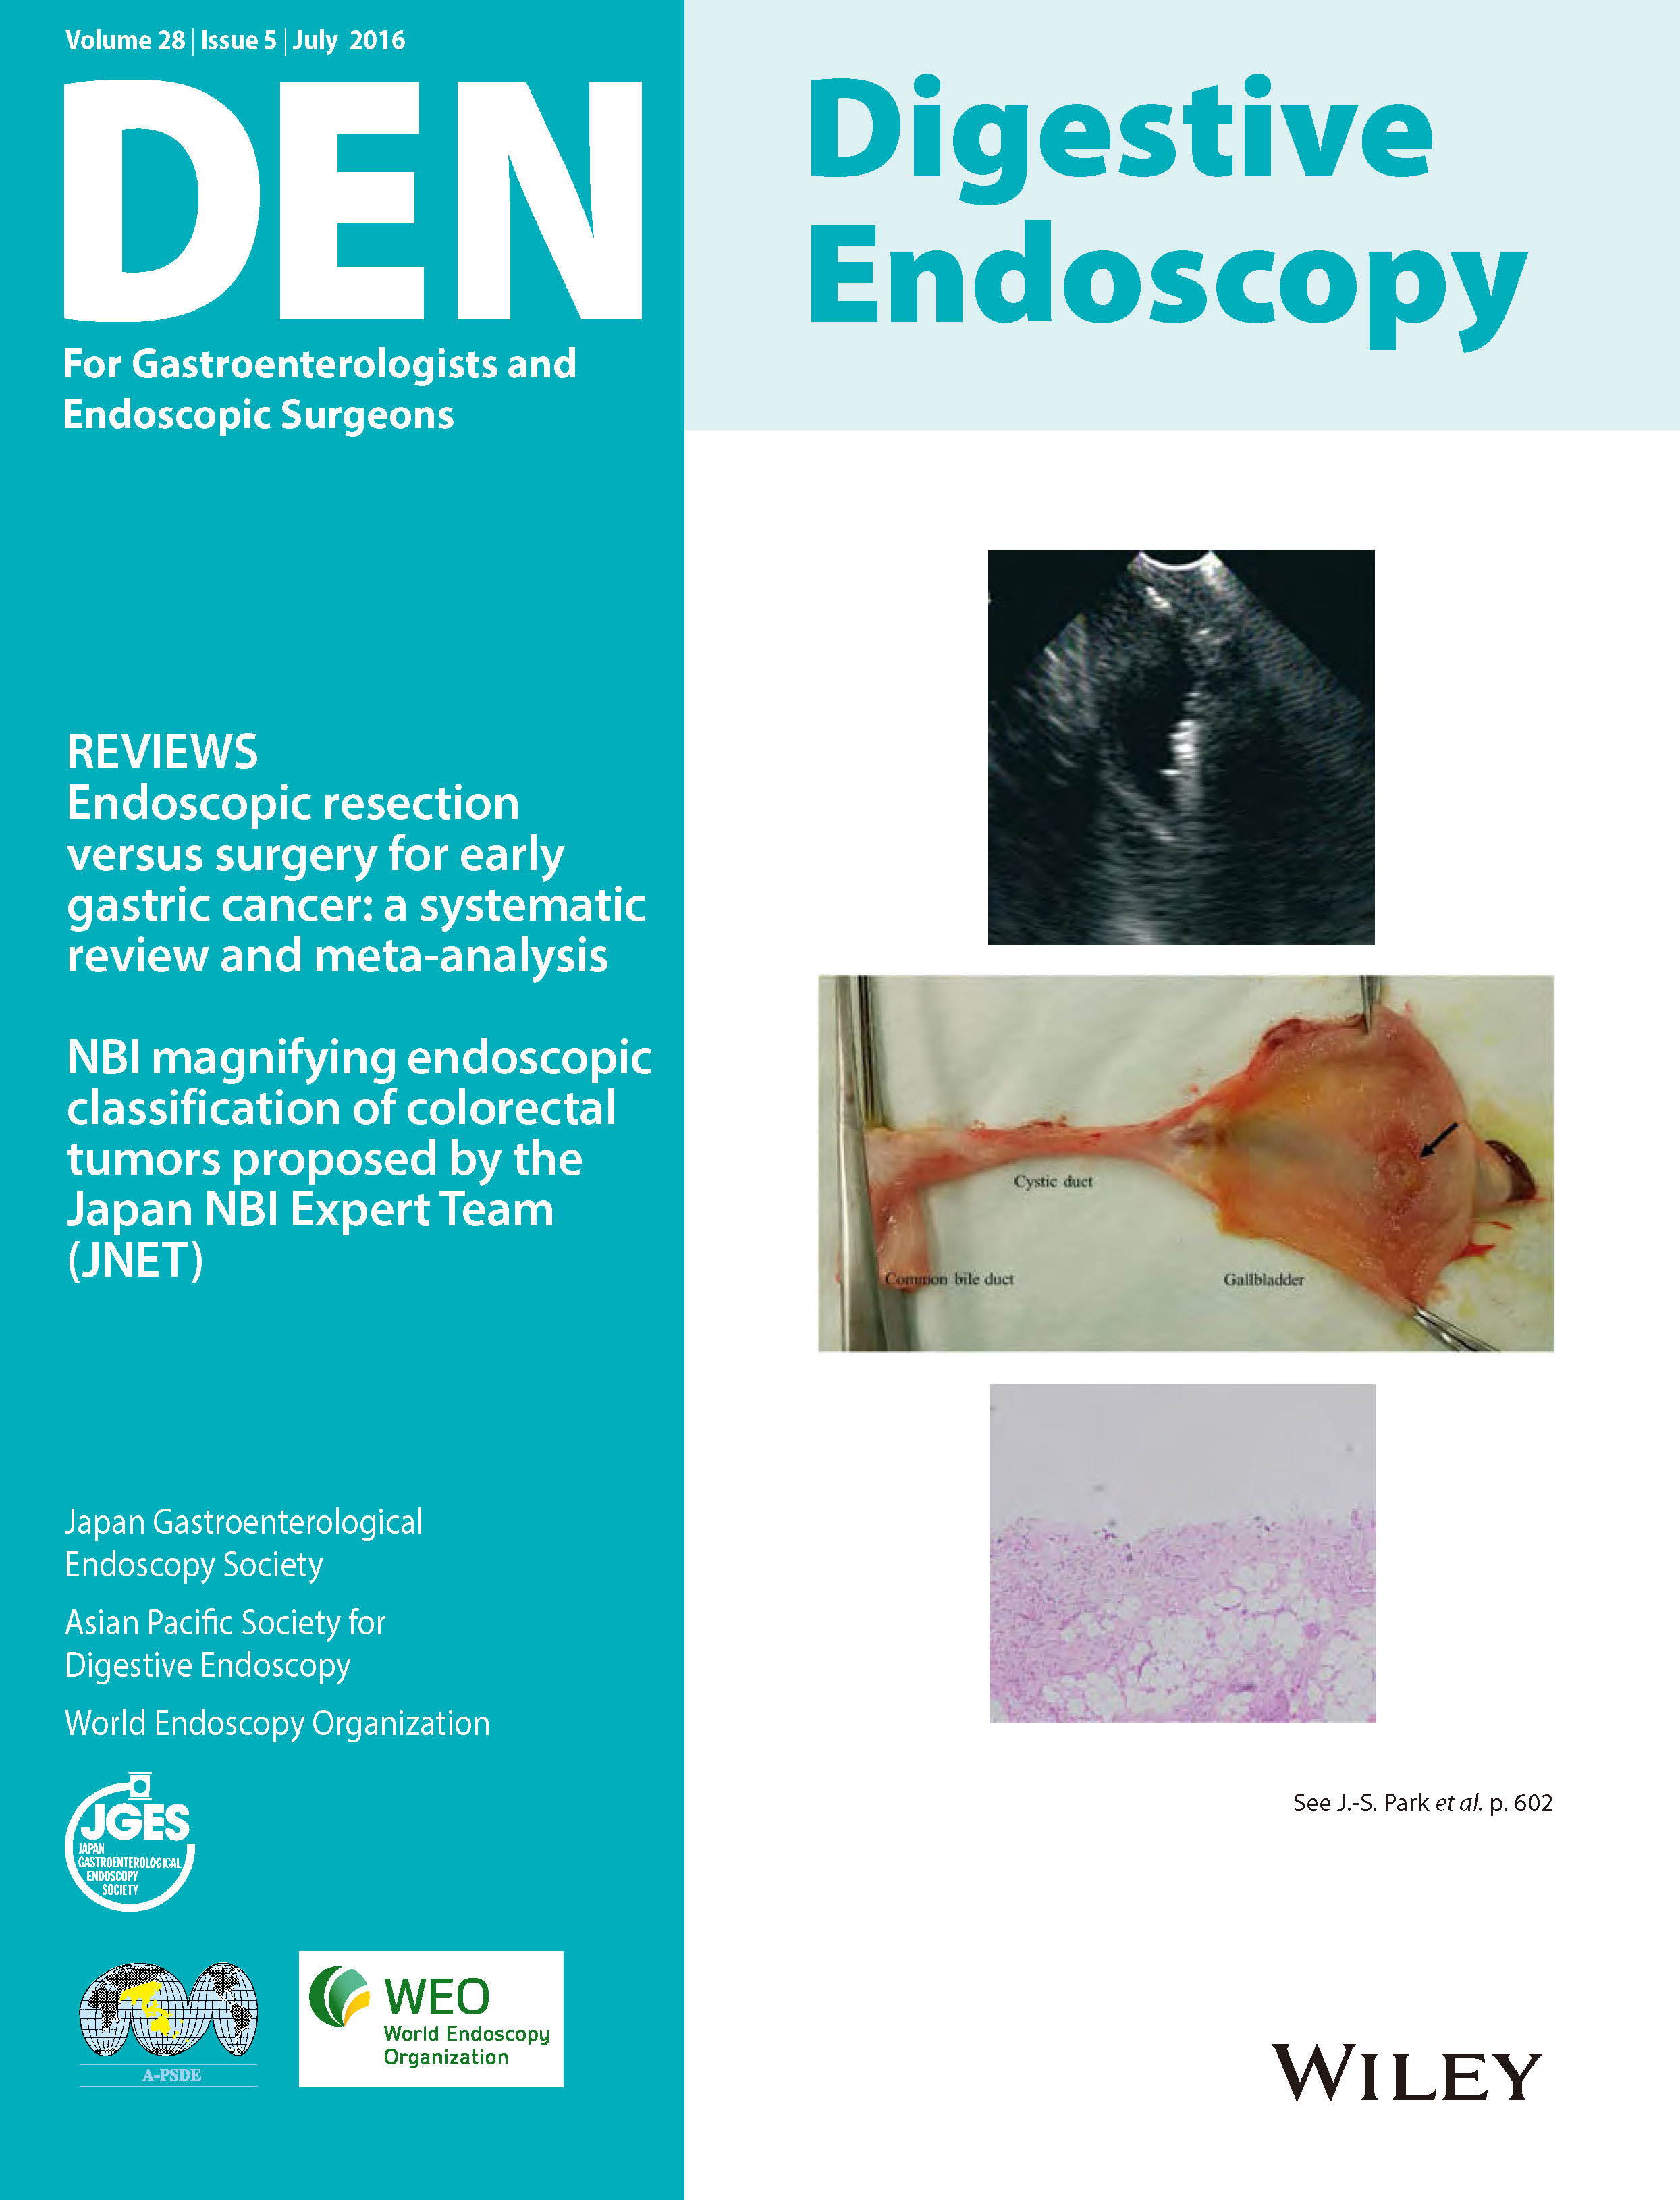 Digestive Endoscopy Vol28-5